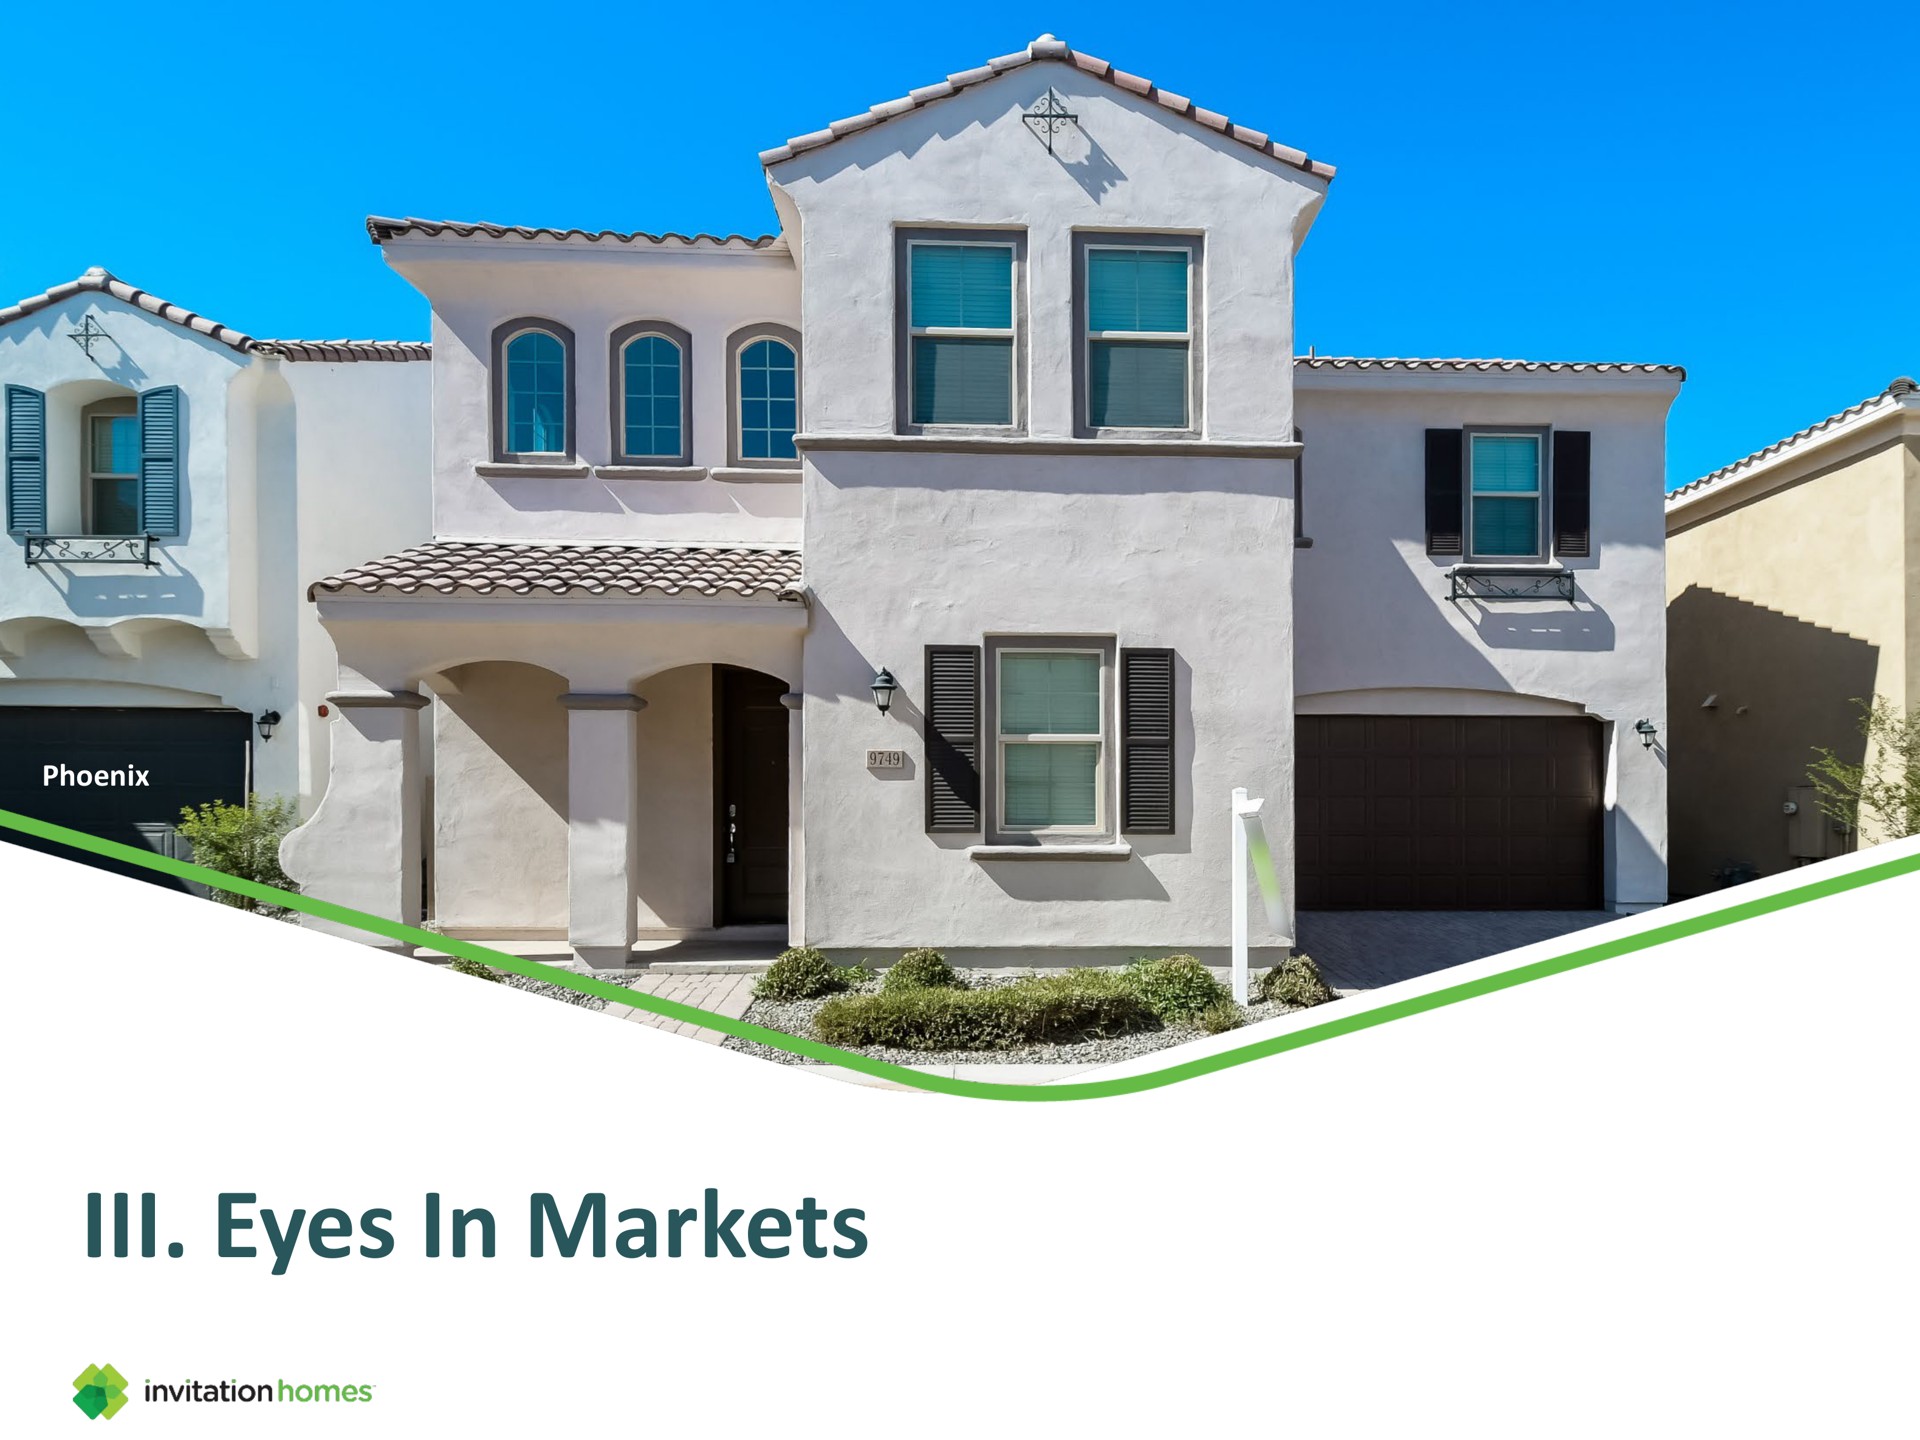 eyes in markets | Invitation Homes